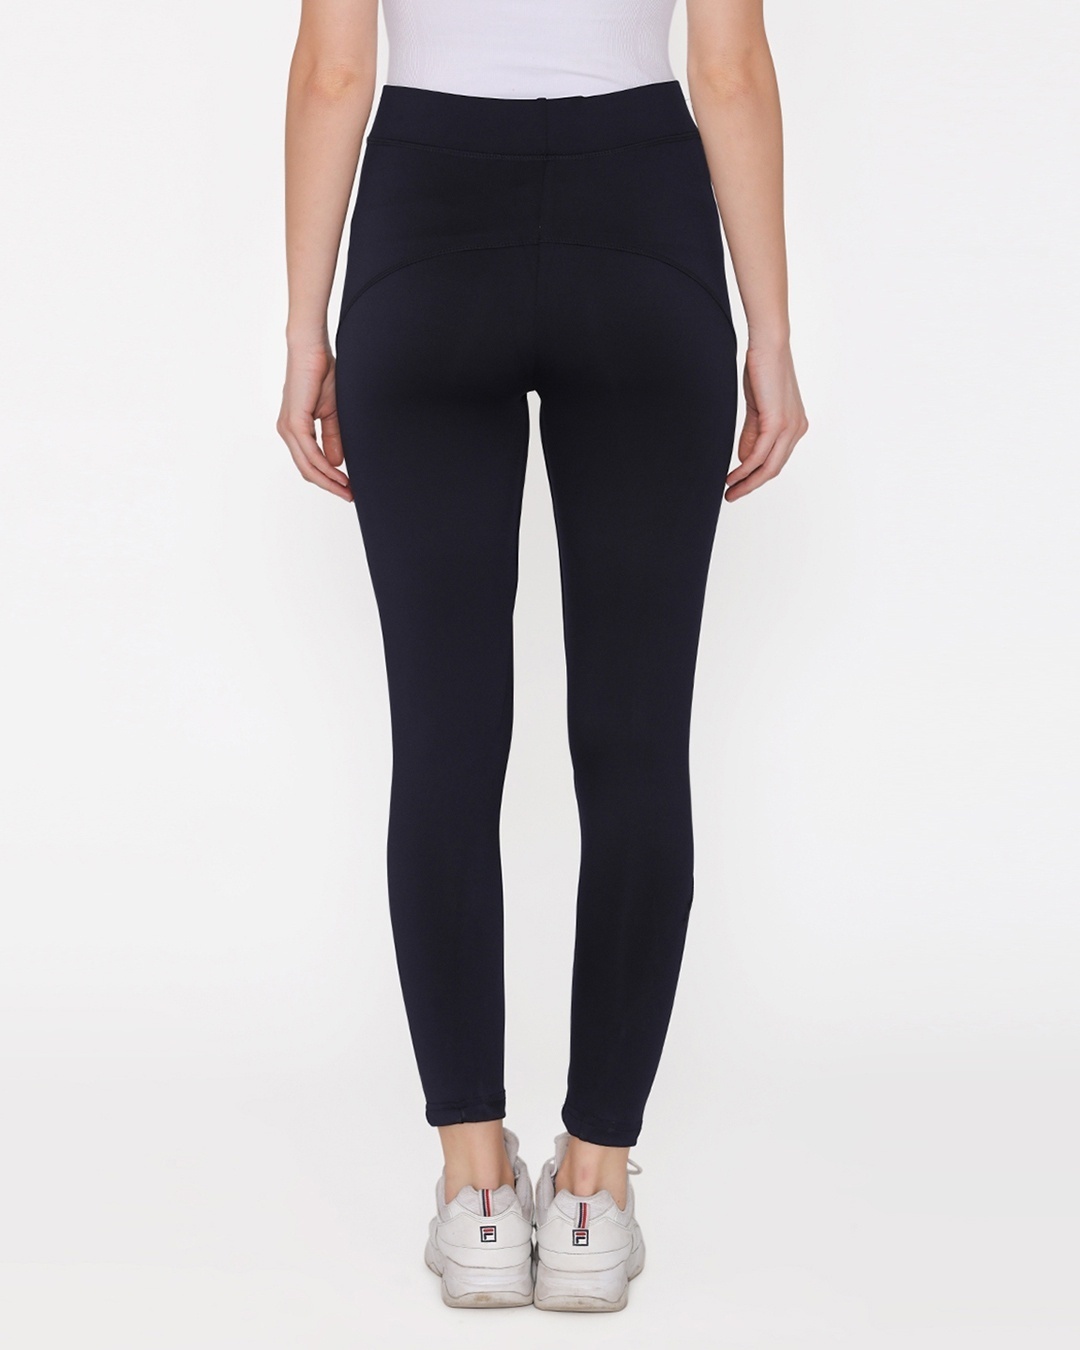 Shop Women's Black Slim Fit Tights-Design